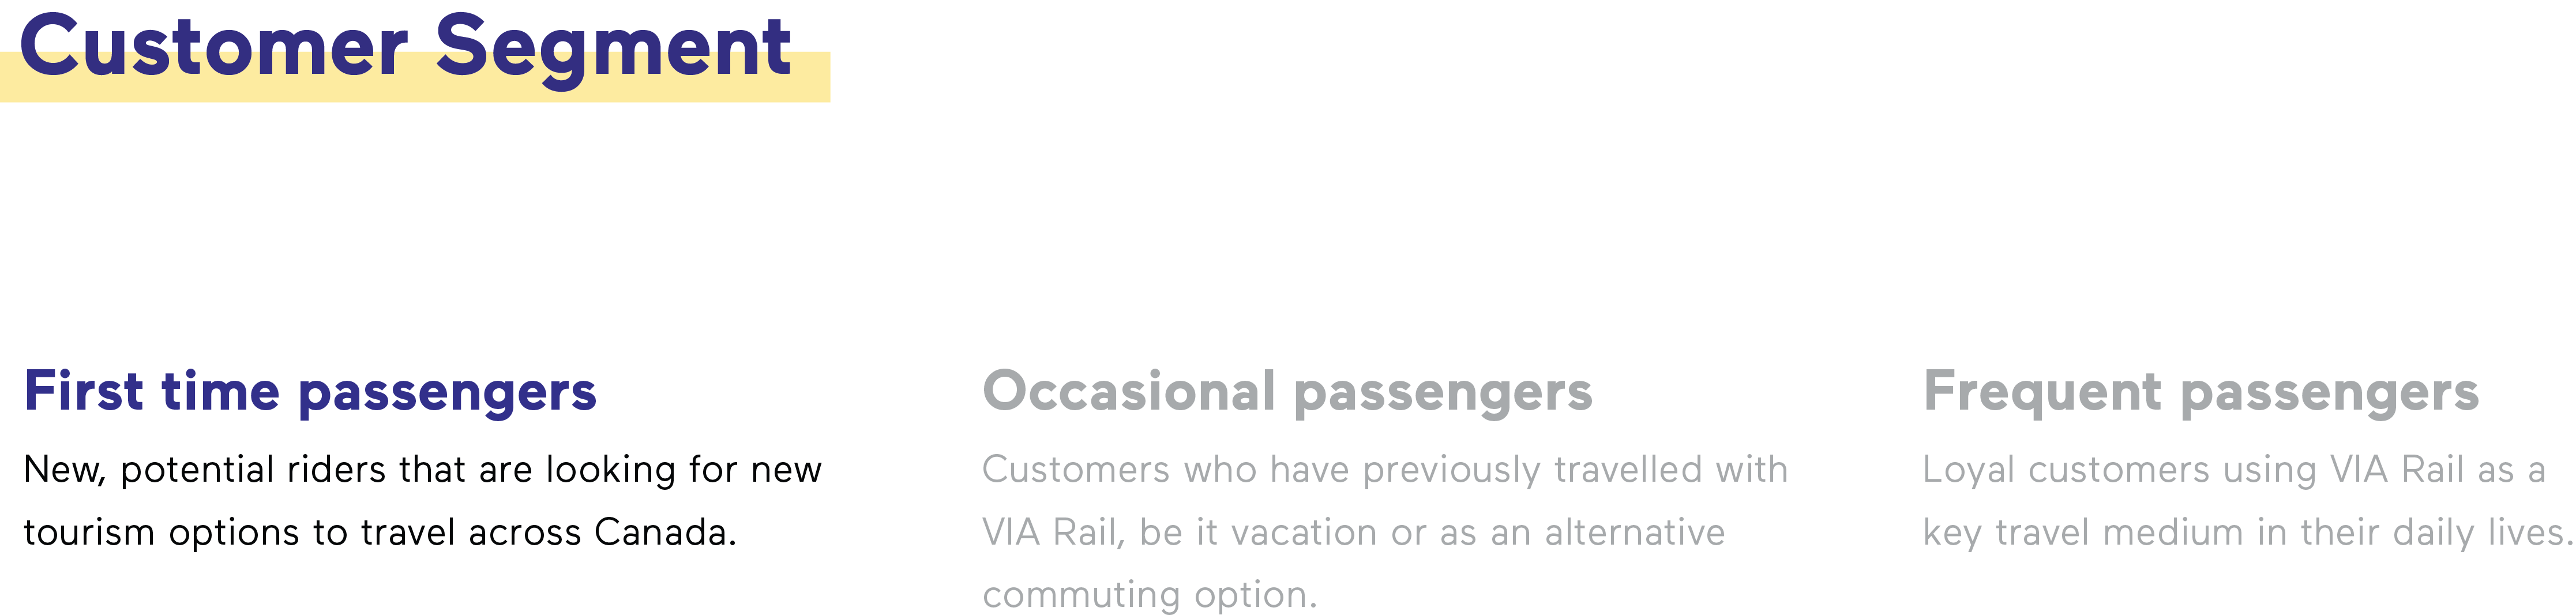 slide deck image of VIA Rail's three customer segments